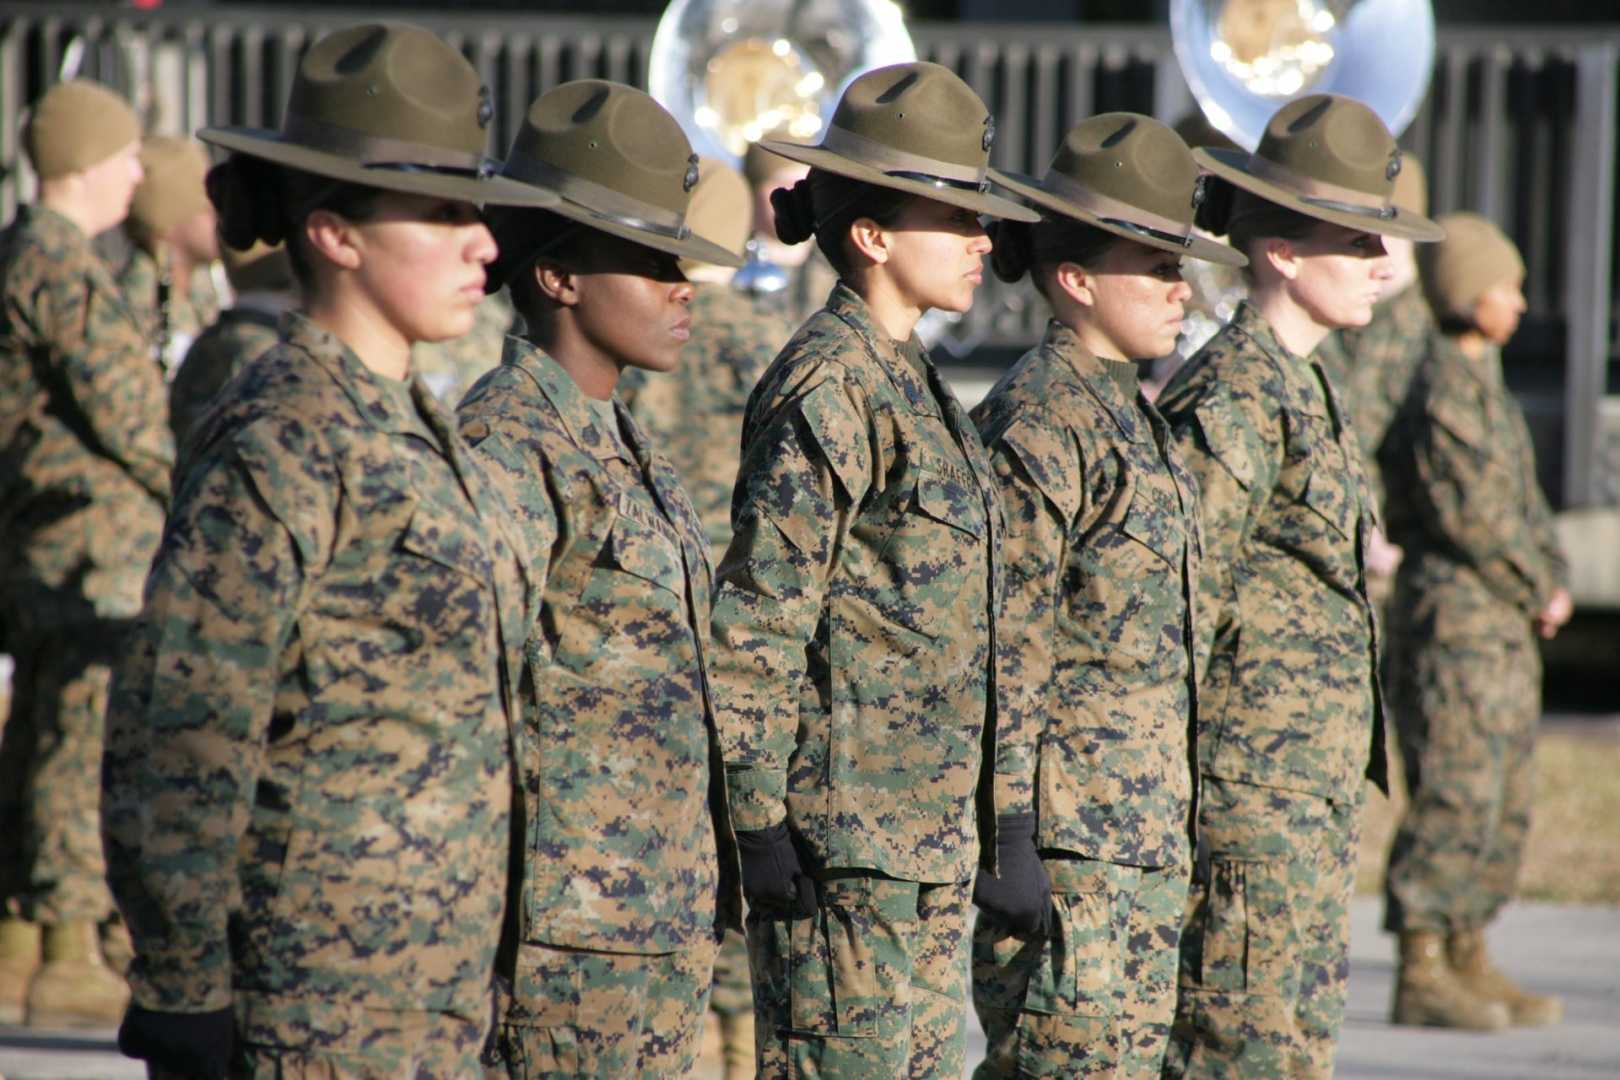 Women in Military